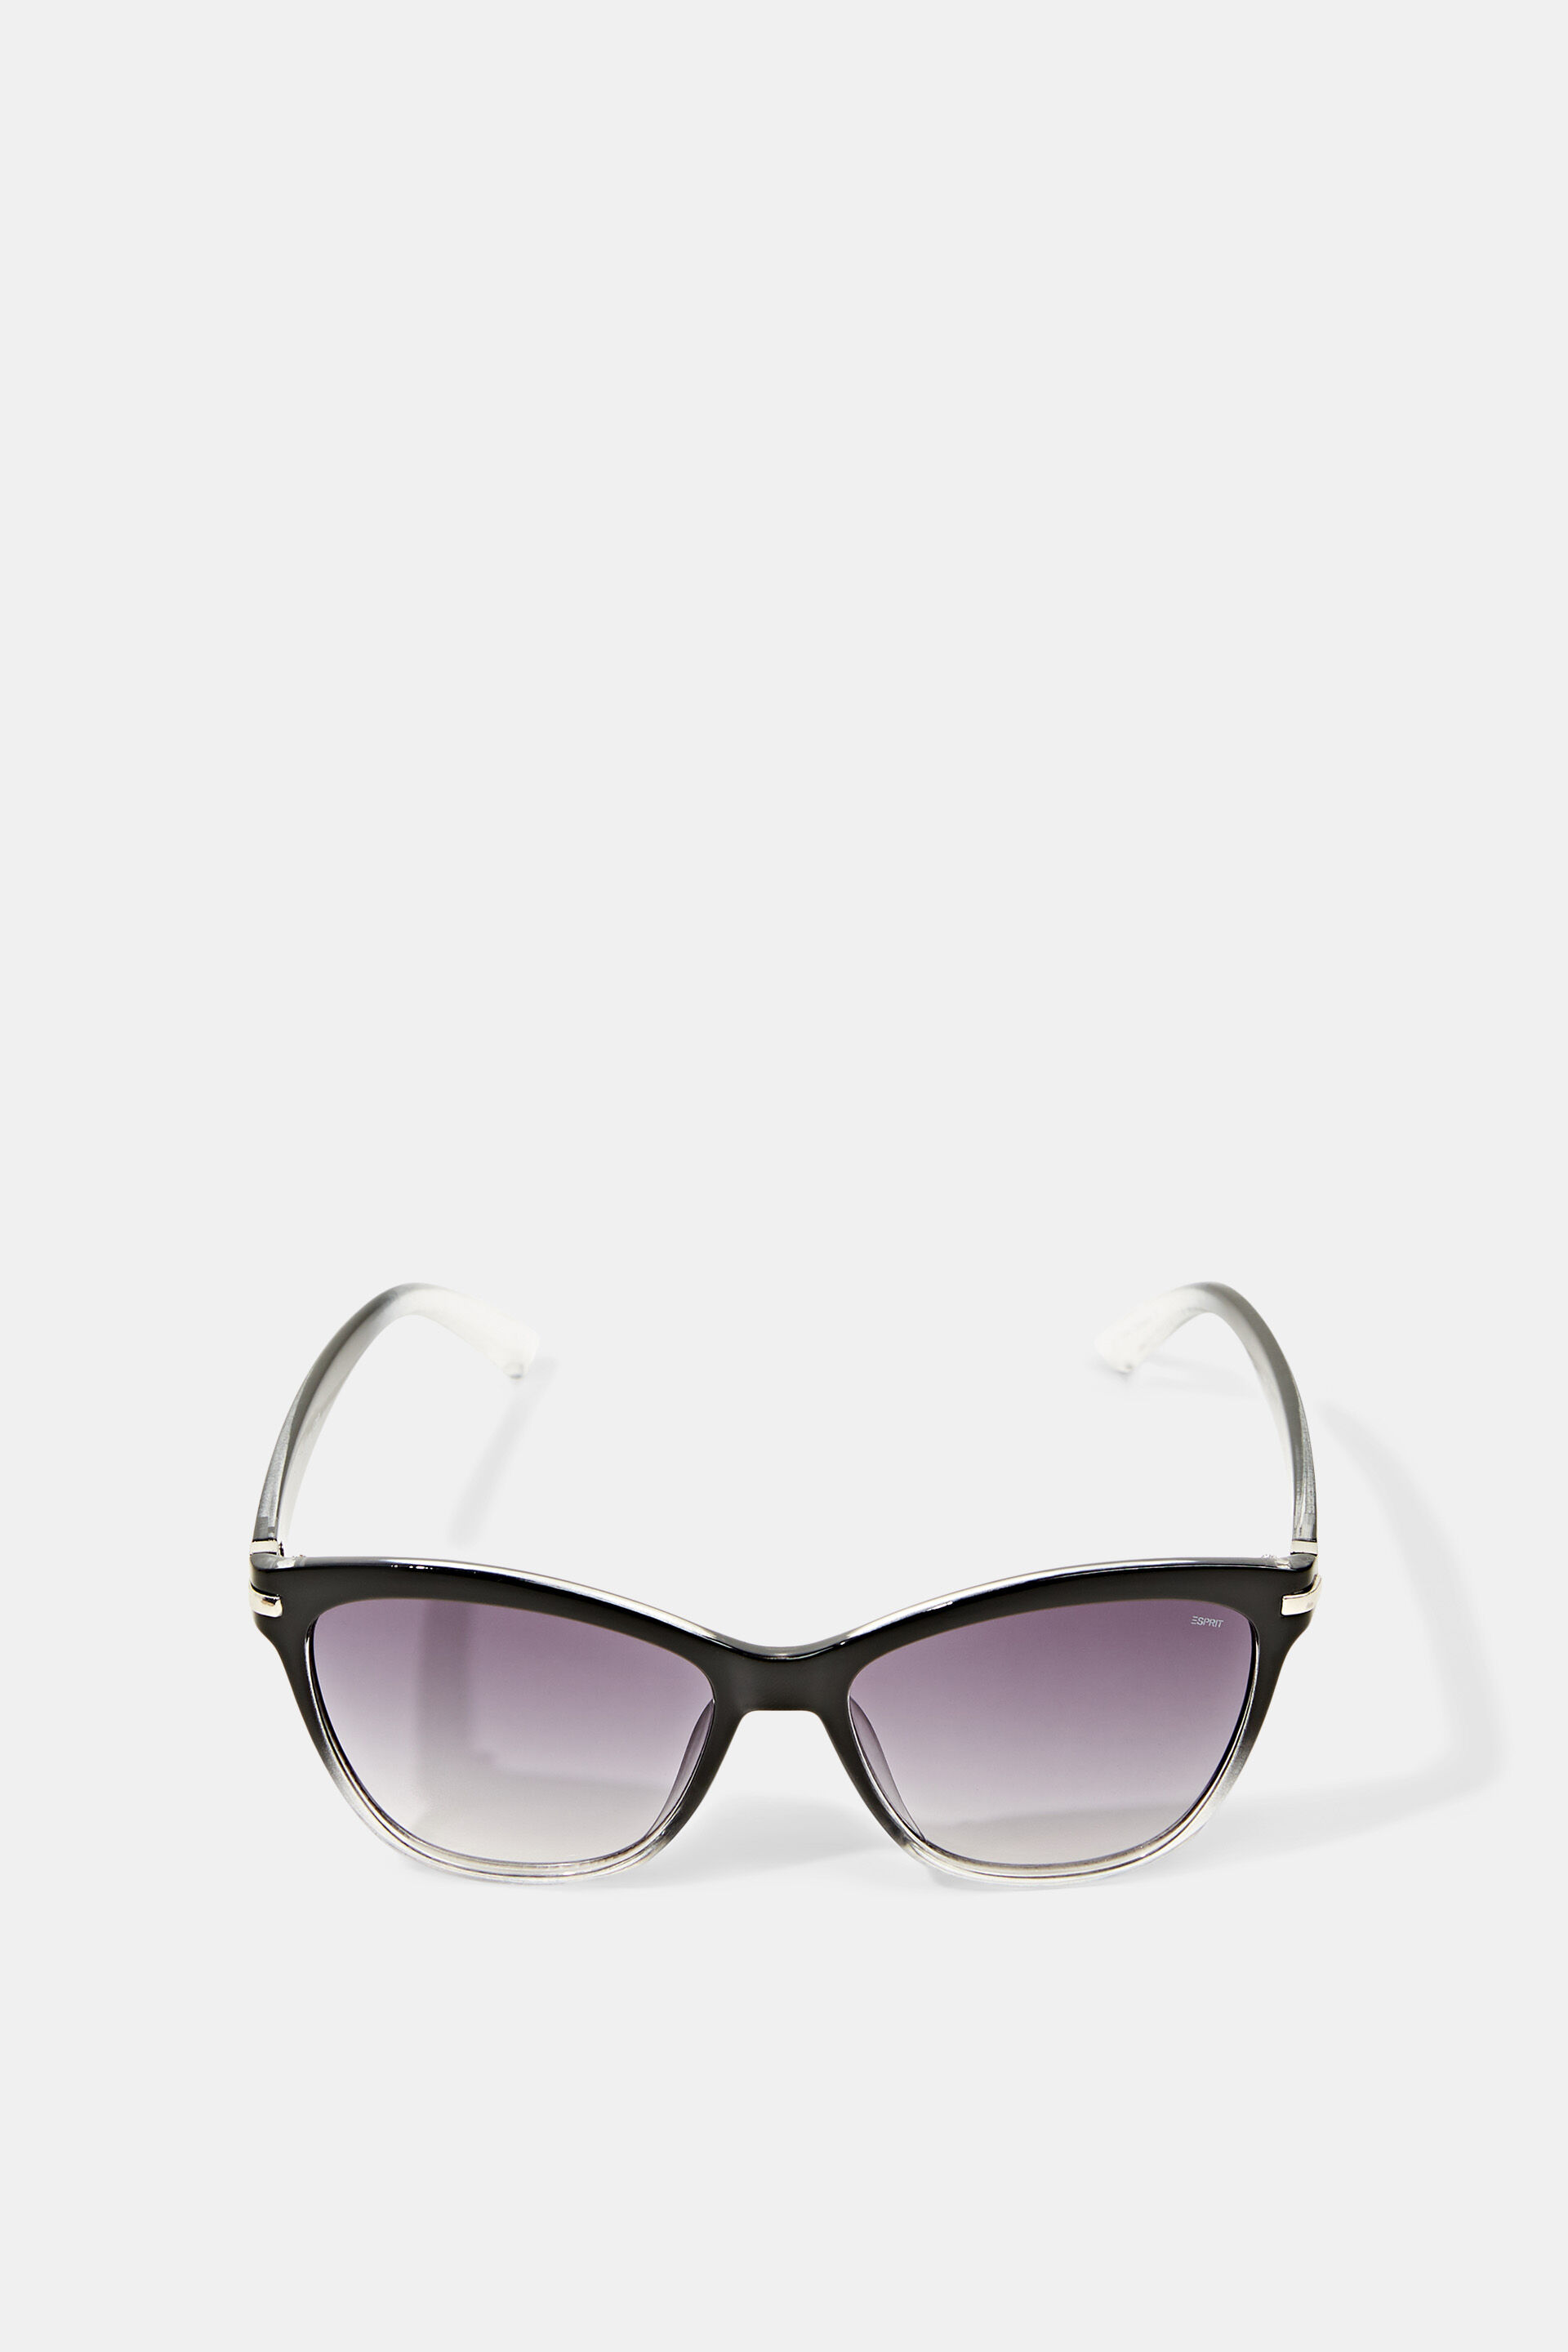 Esprit details with Sunglasses metal